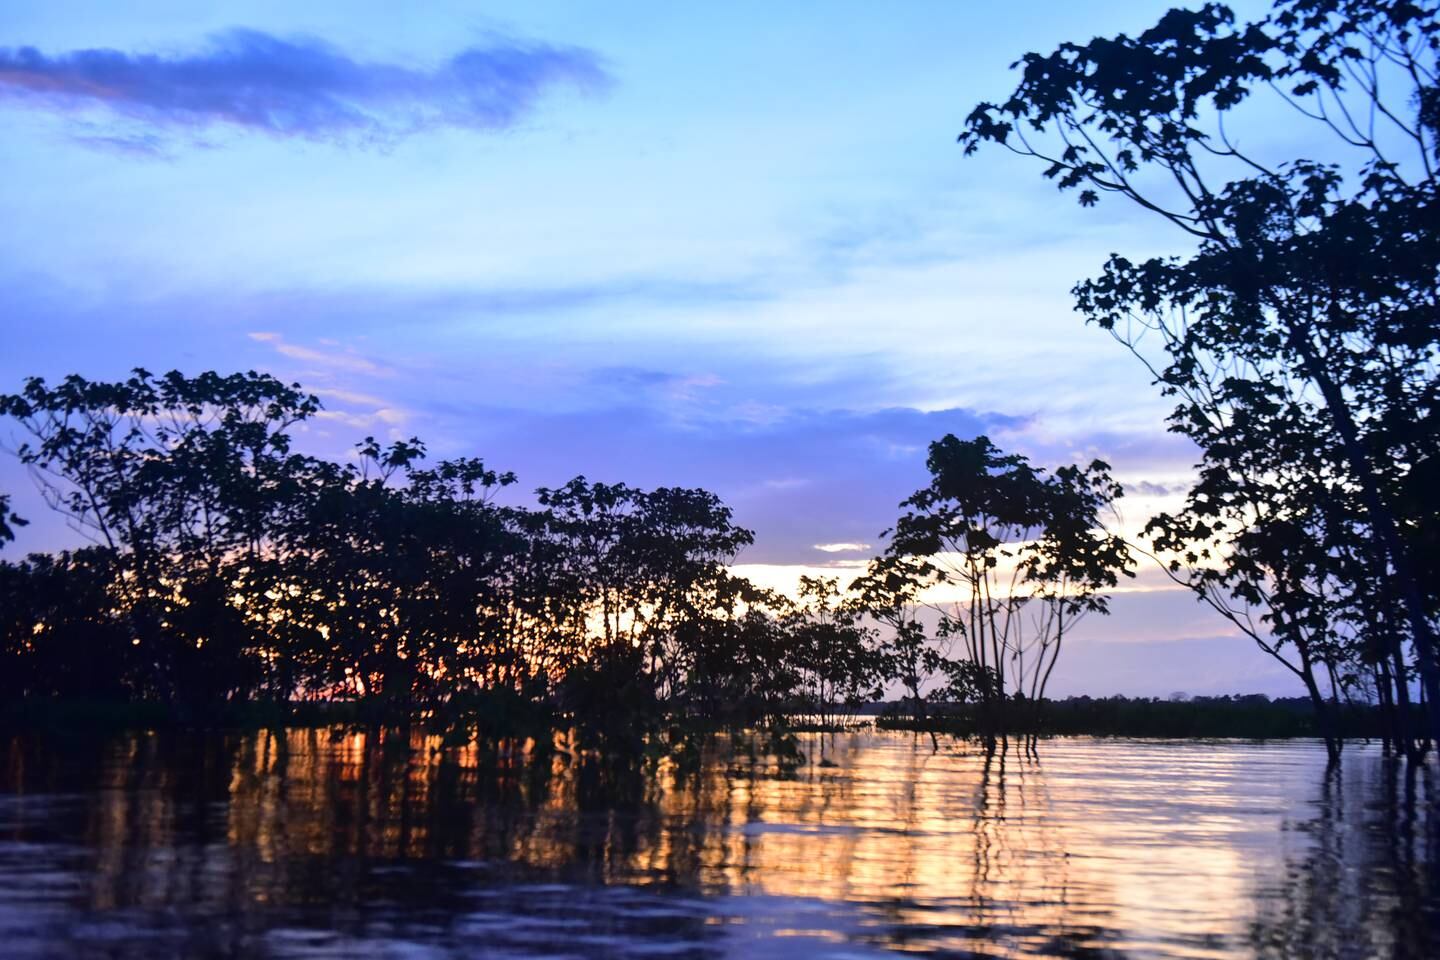 The Rio Negro at sunset. Photo: Marcio Benchimol